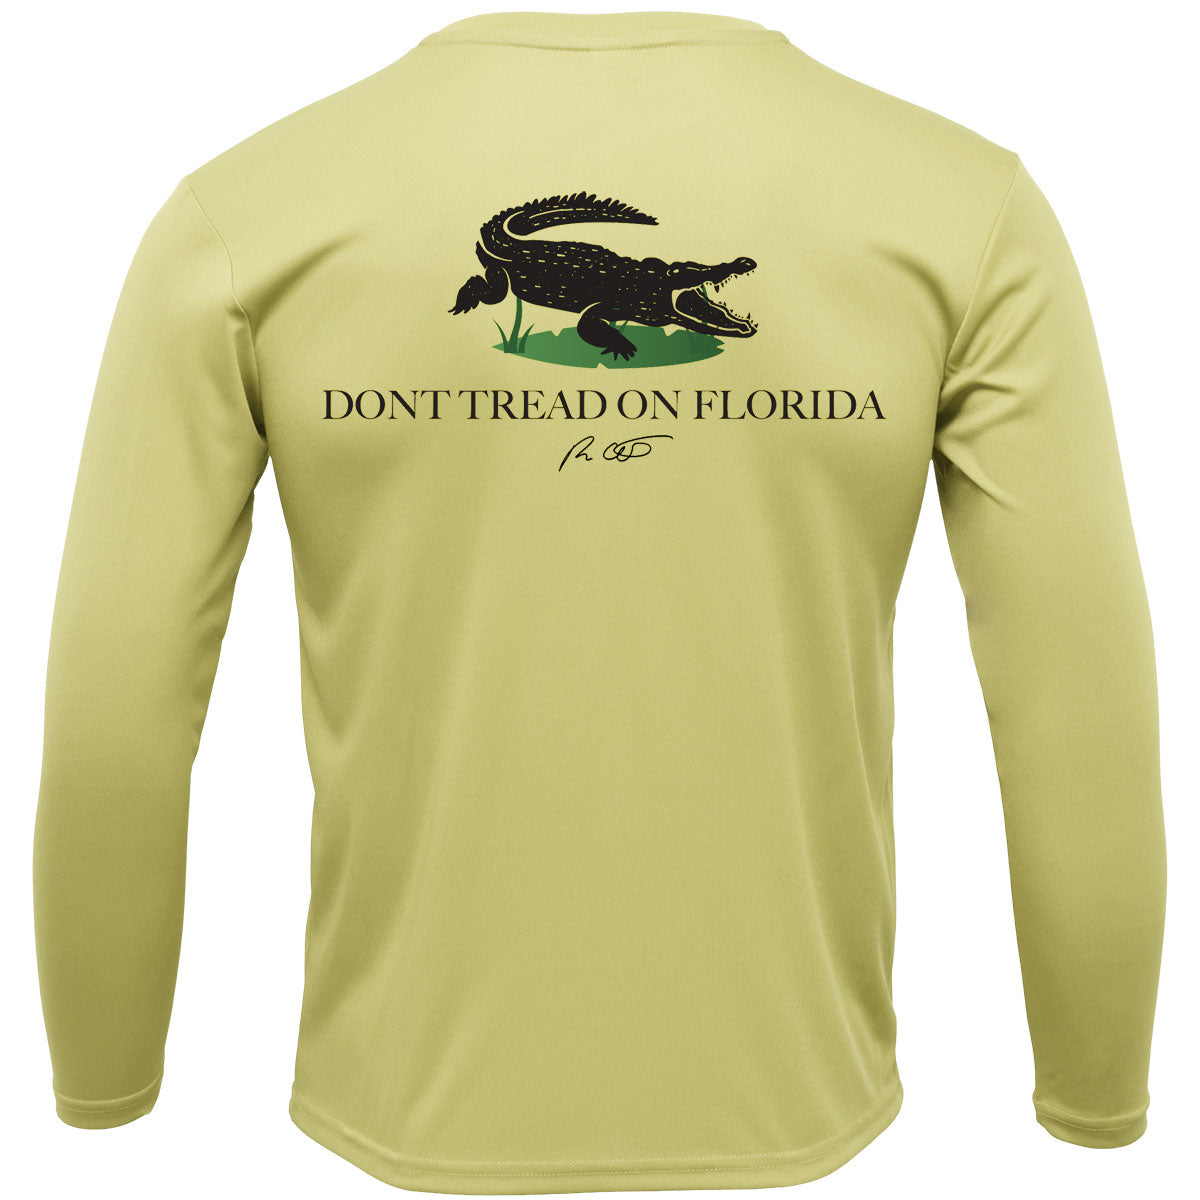 NEW ARTWORK] Don't Tread On Florida Fishing Shirt with Florida